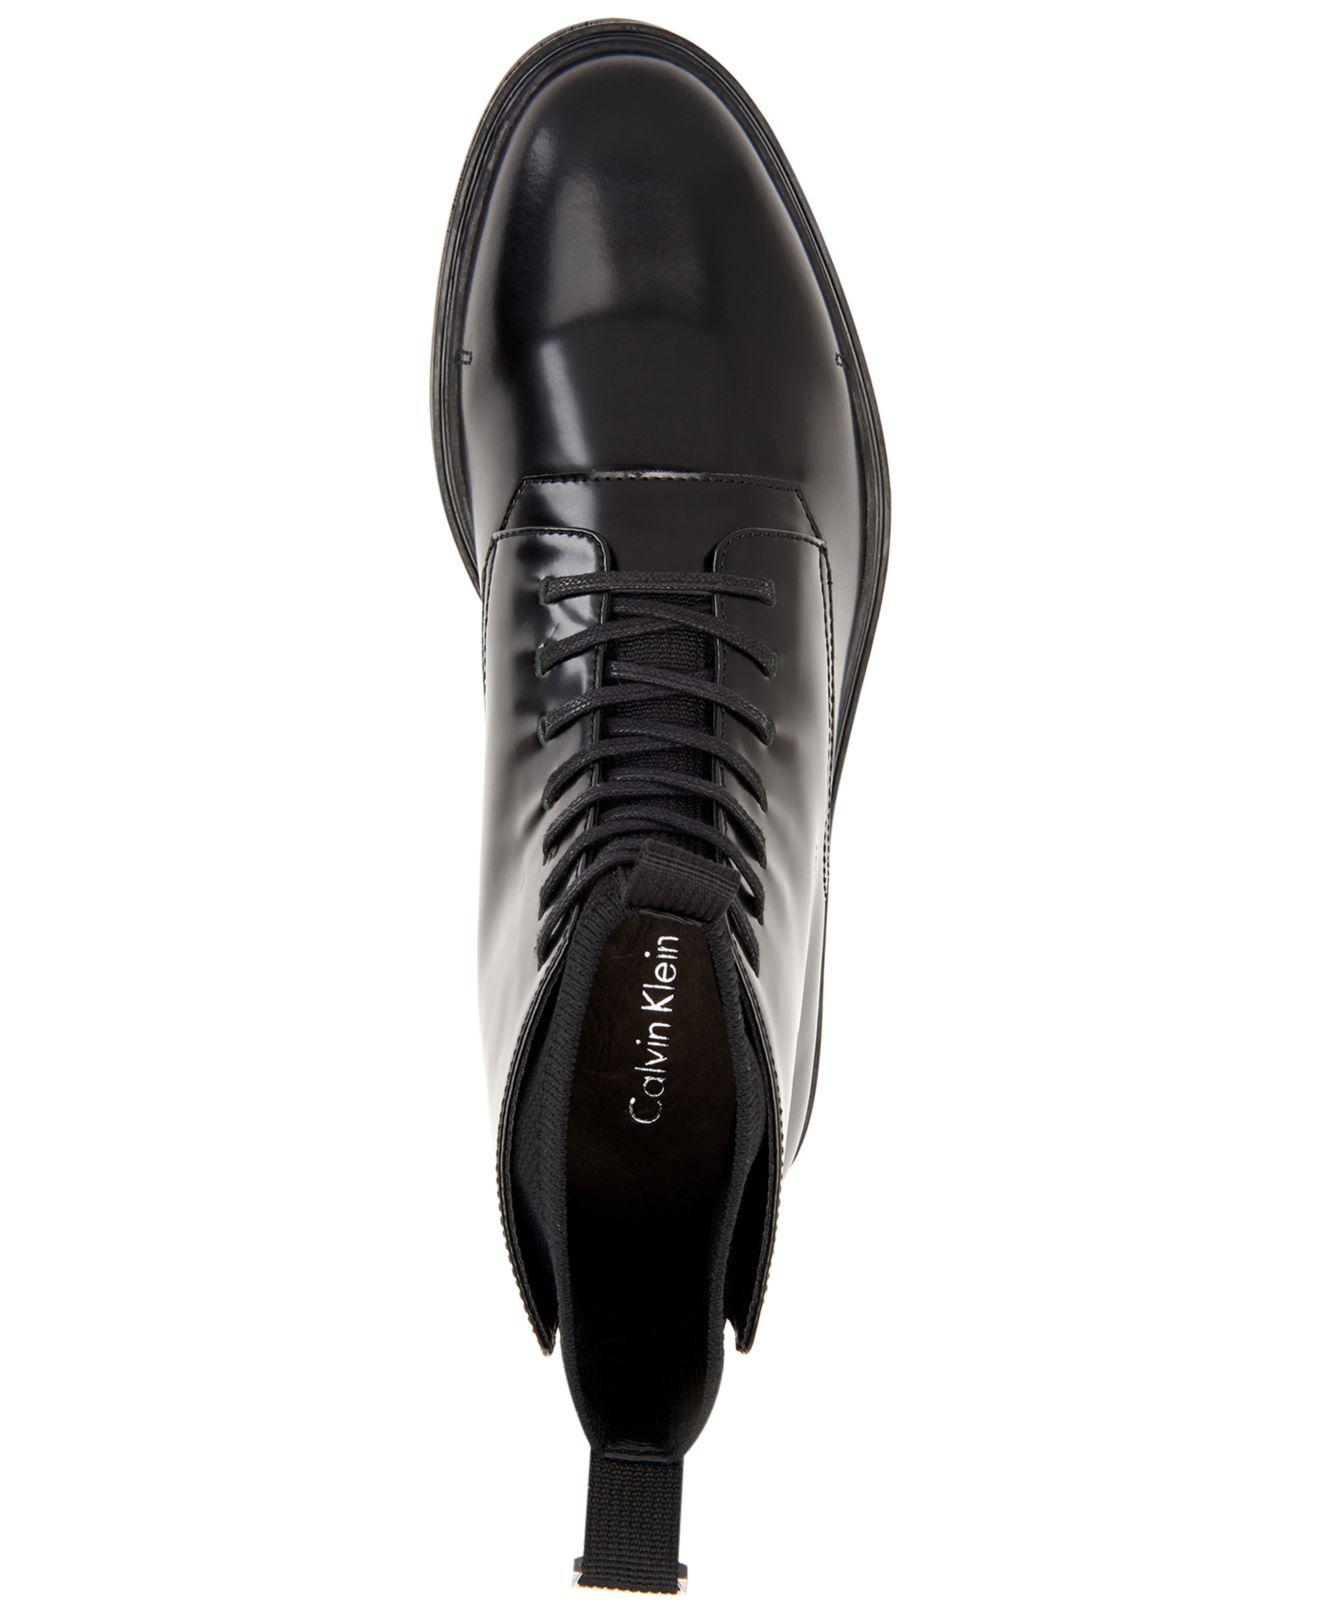 Calvin Klein Devlin Leather Boot in Black for Men - Lyst